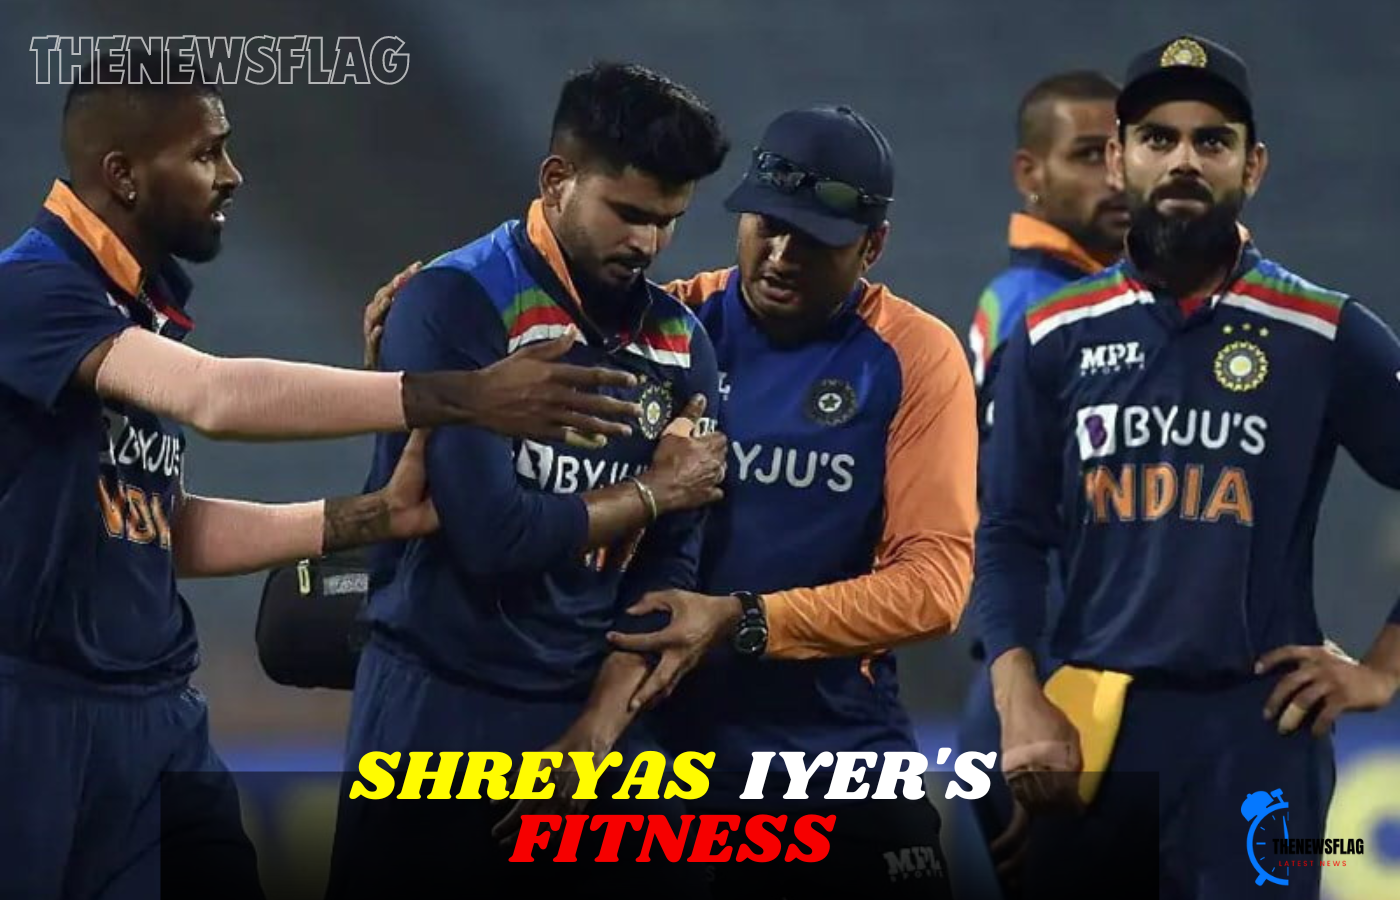 Before KKR's opening match against SRH, Nitish Rana updates the status of Shreyas Iyer's fitness.